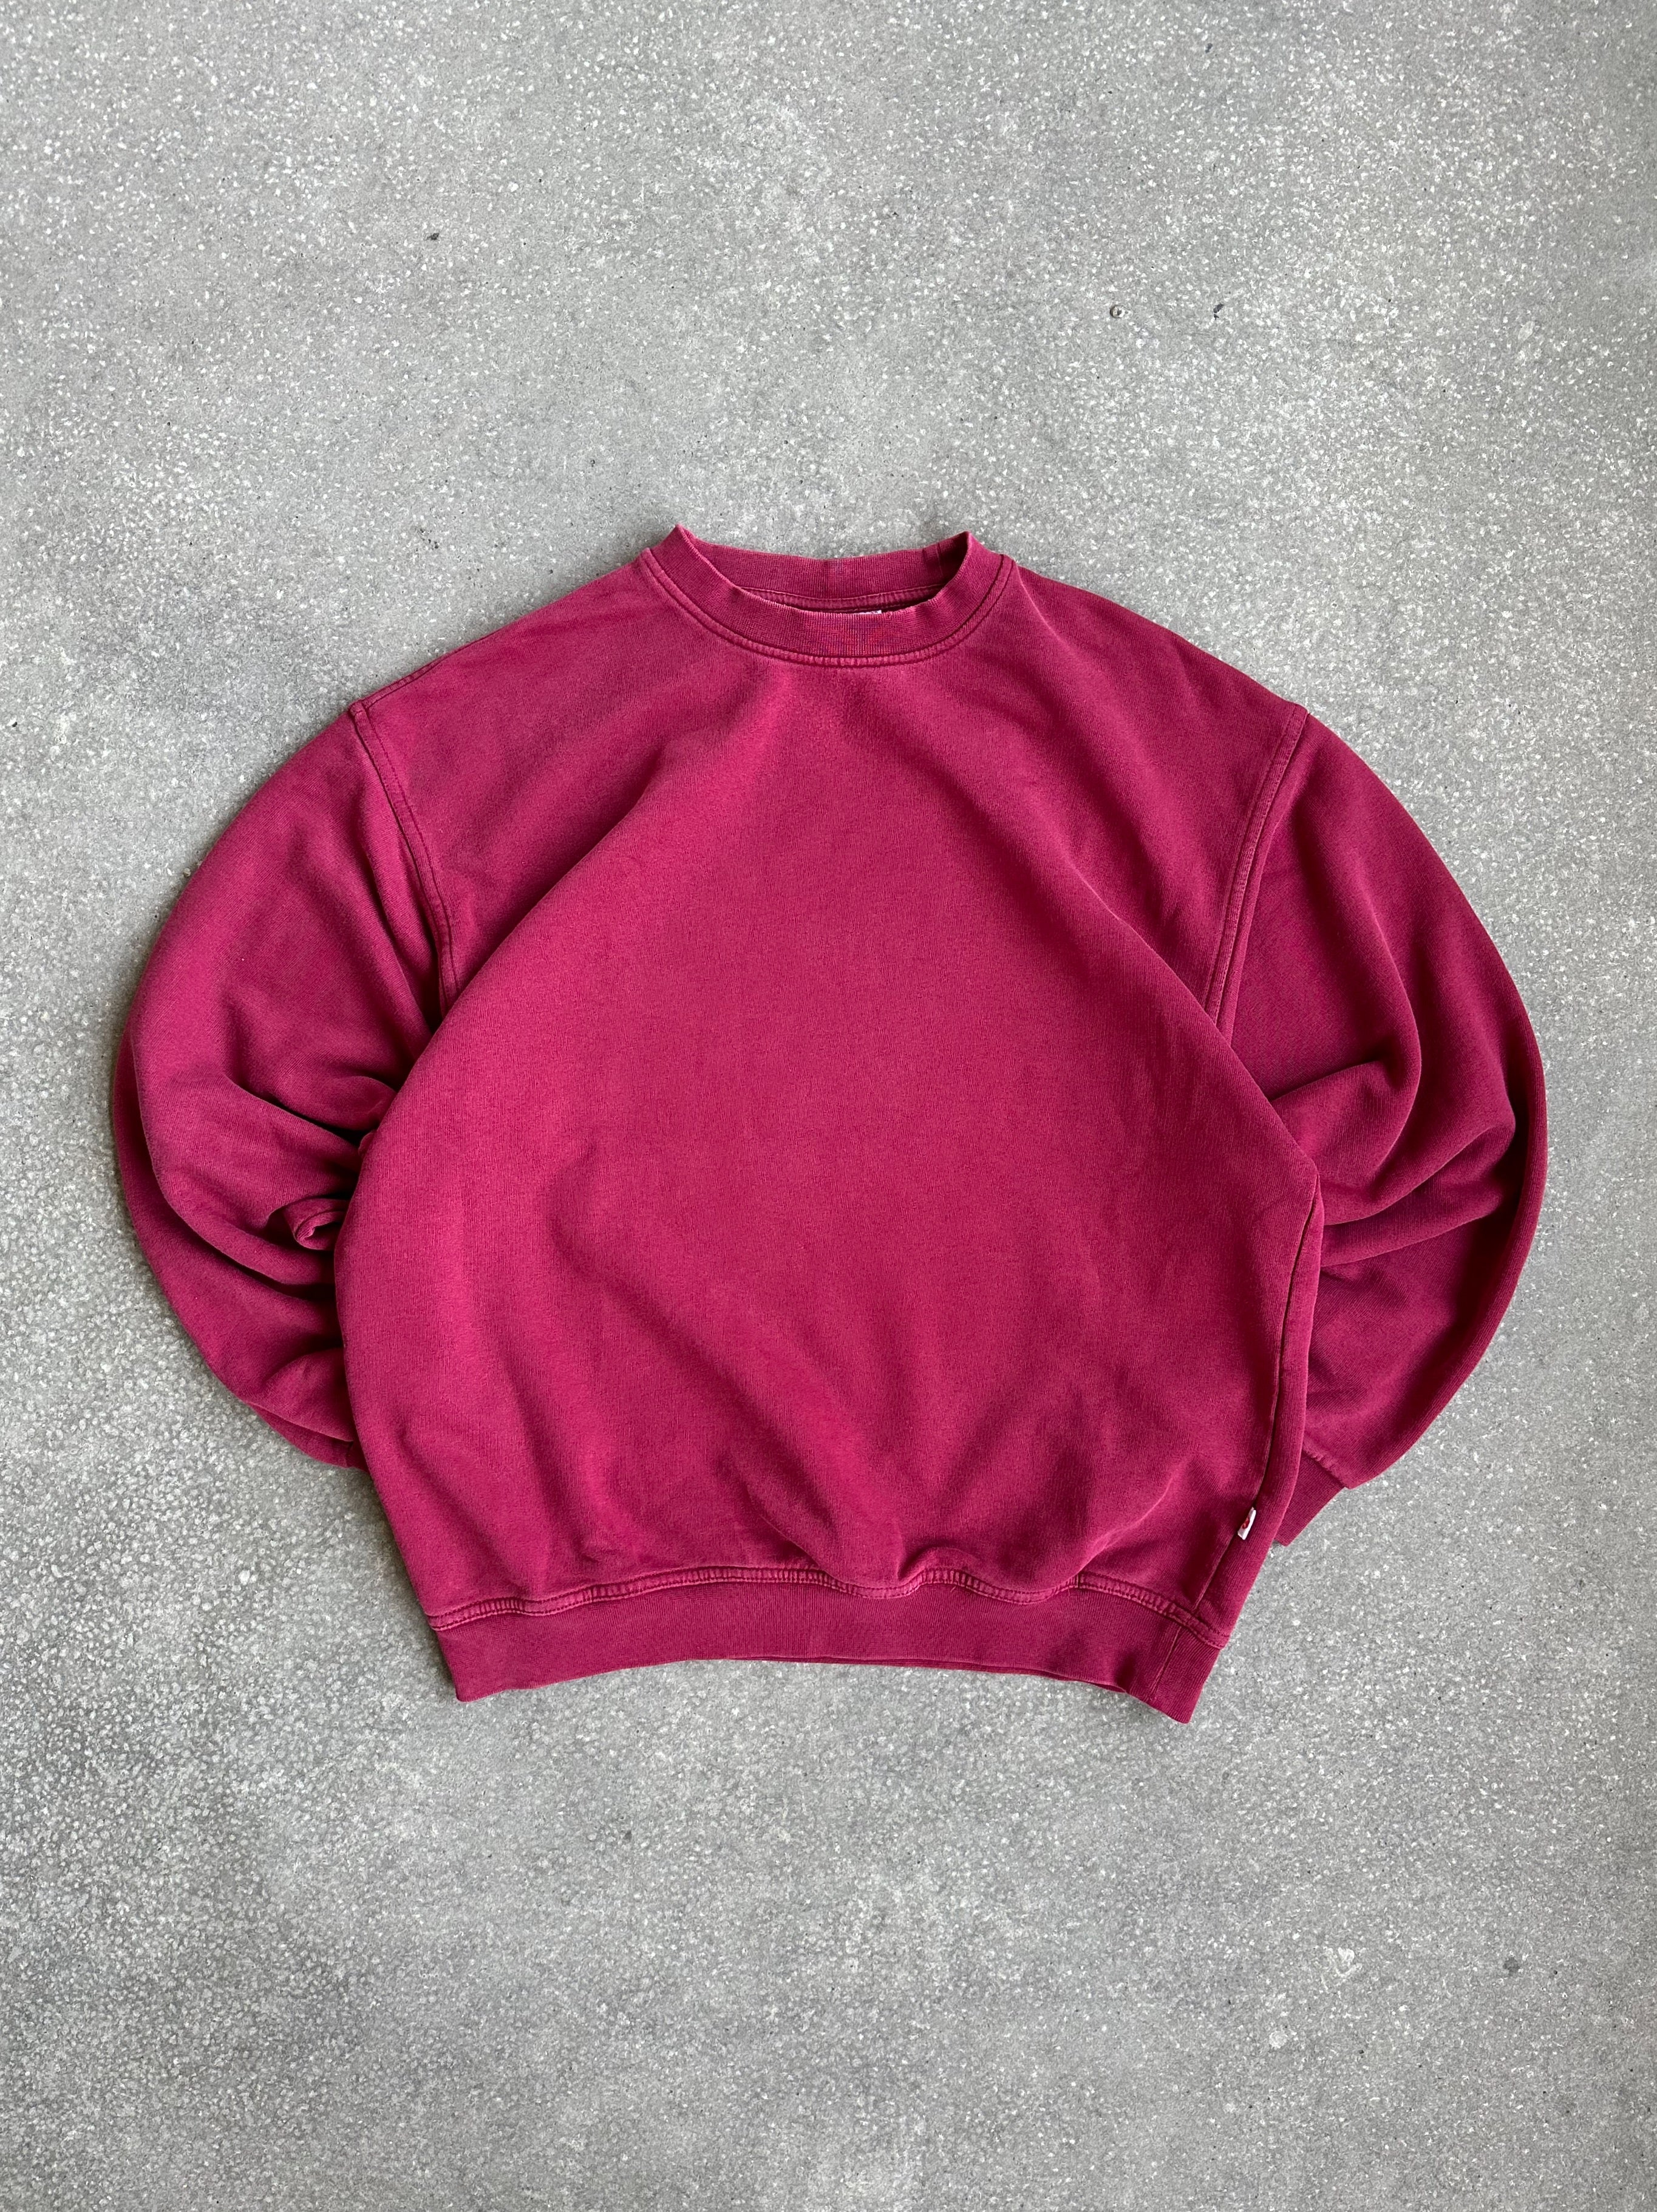 Vintage Hakro Activewear Crewneck Sweater - Medium